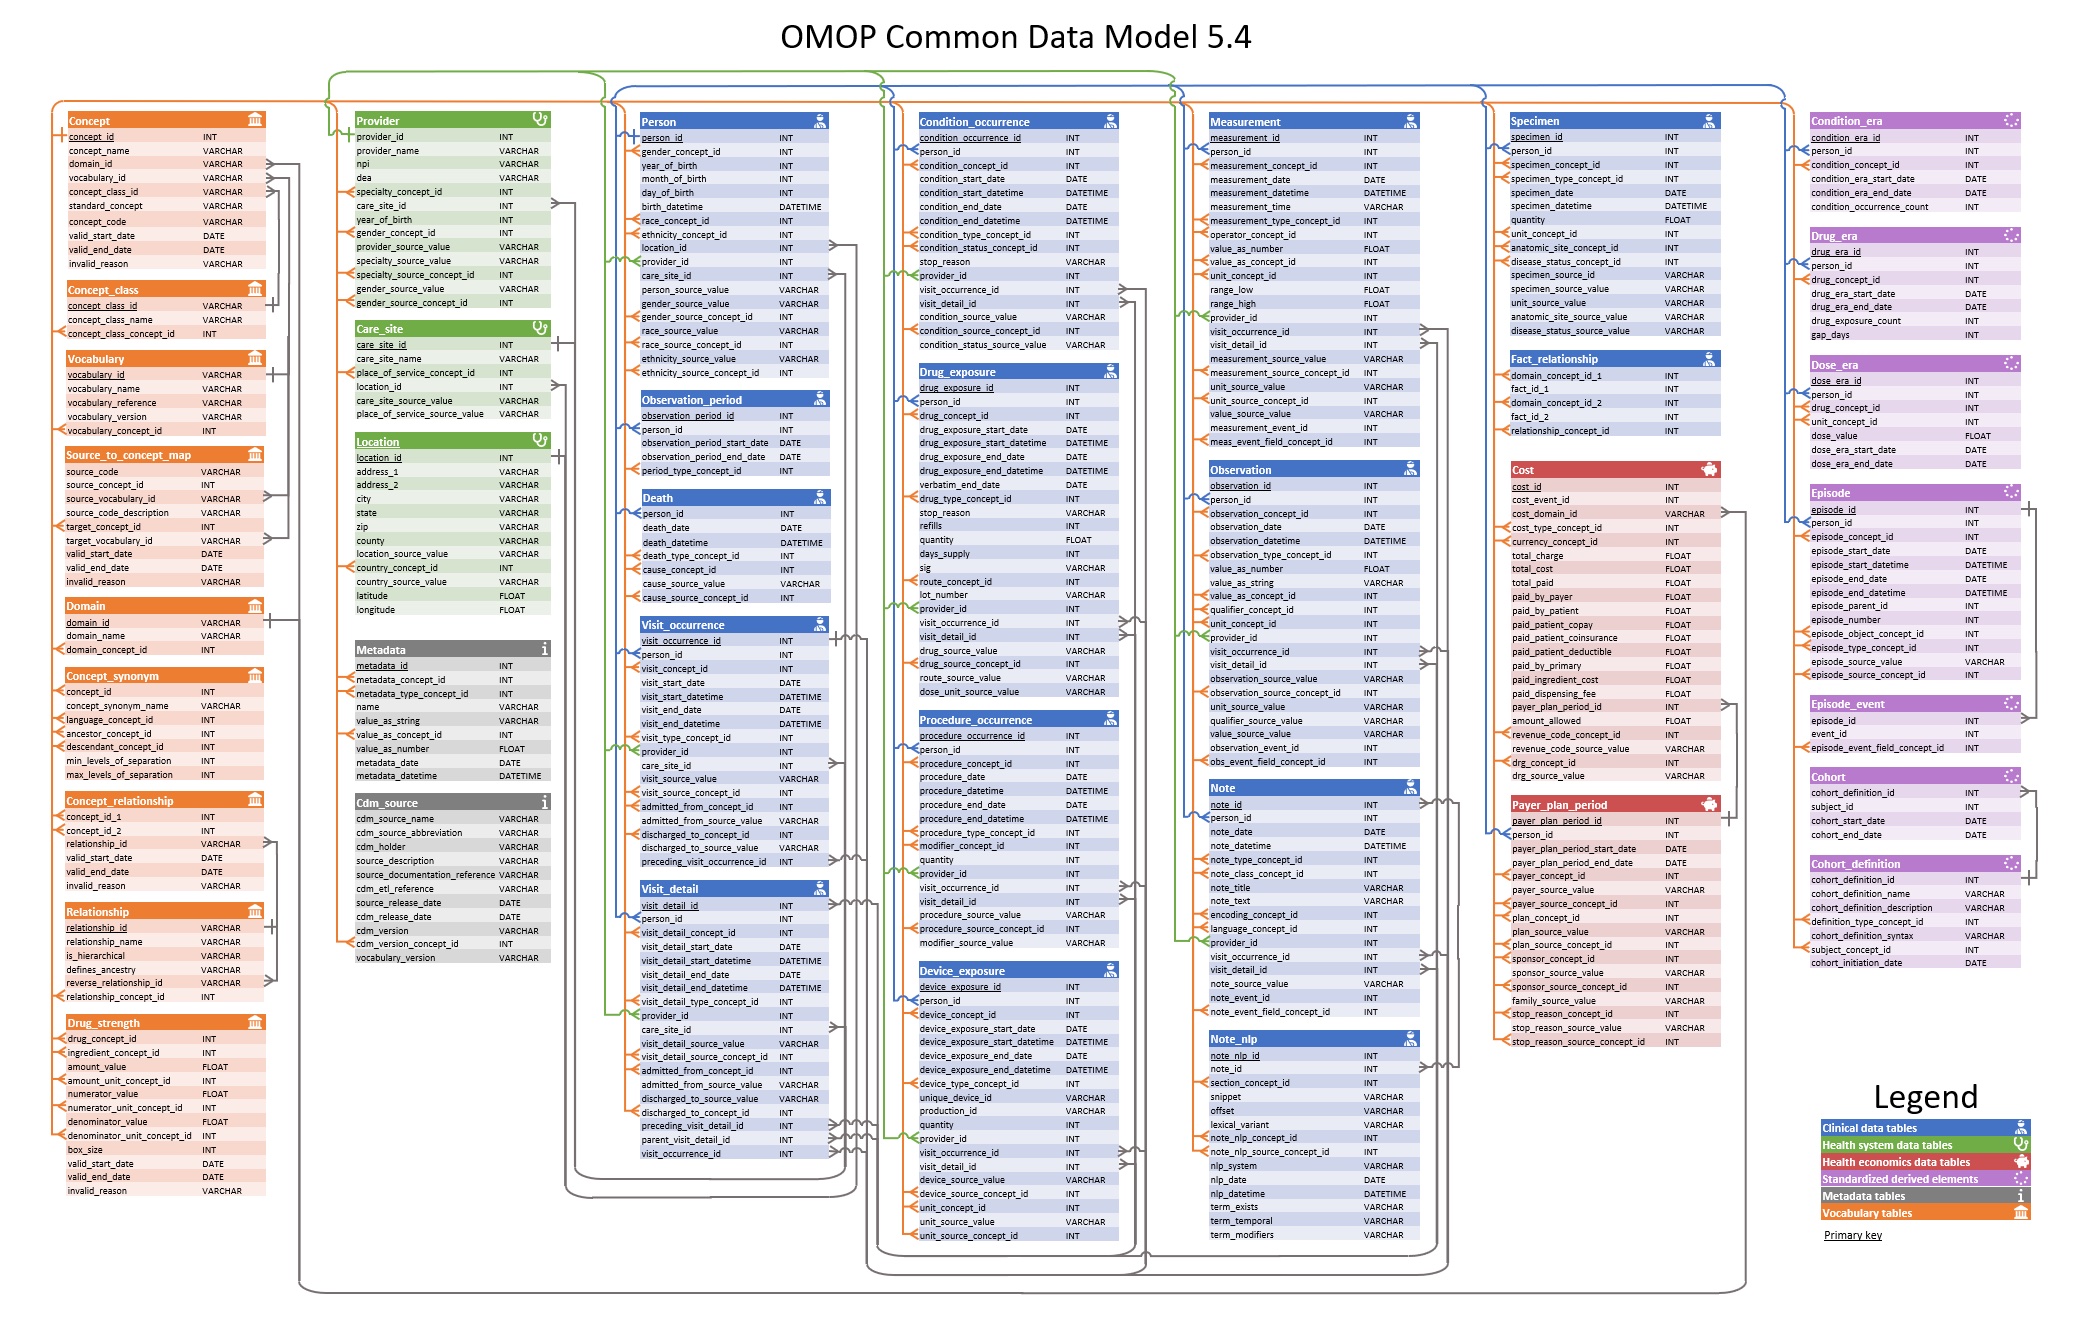 OMOP - Common Data Model 5.4